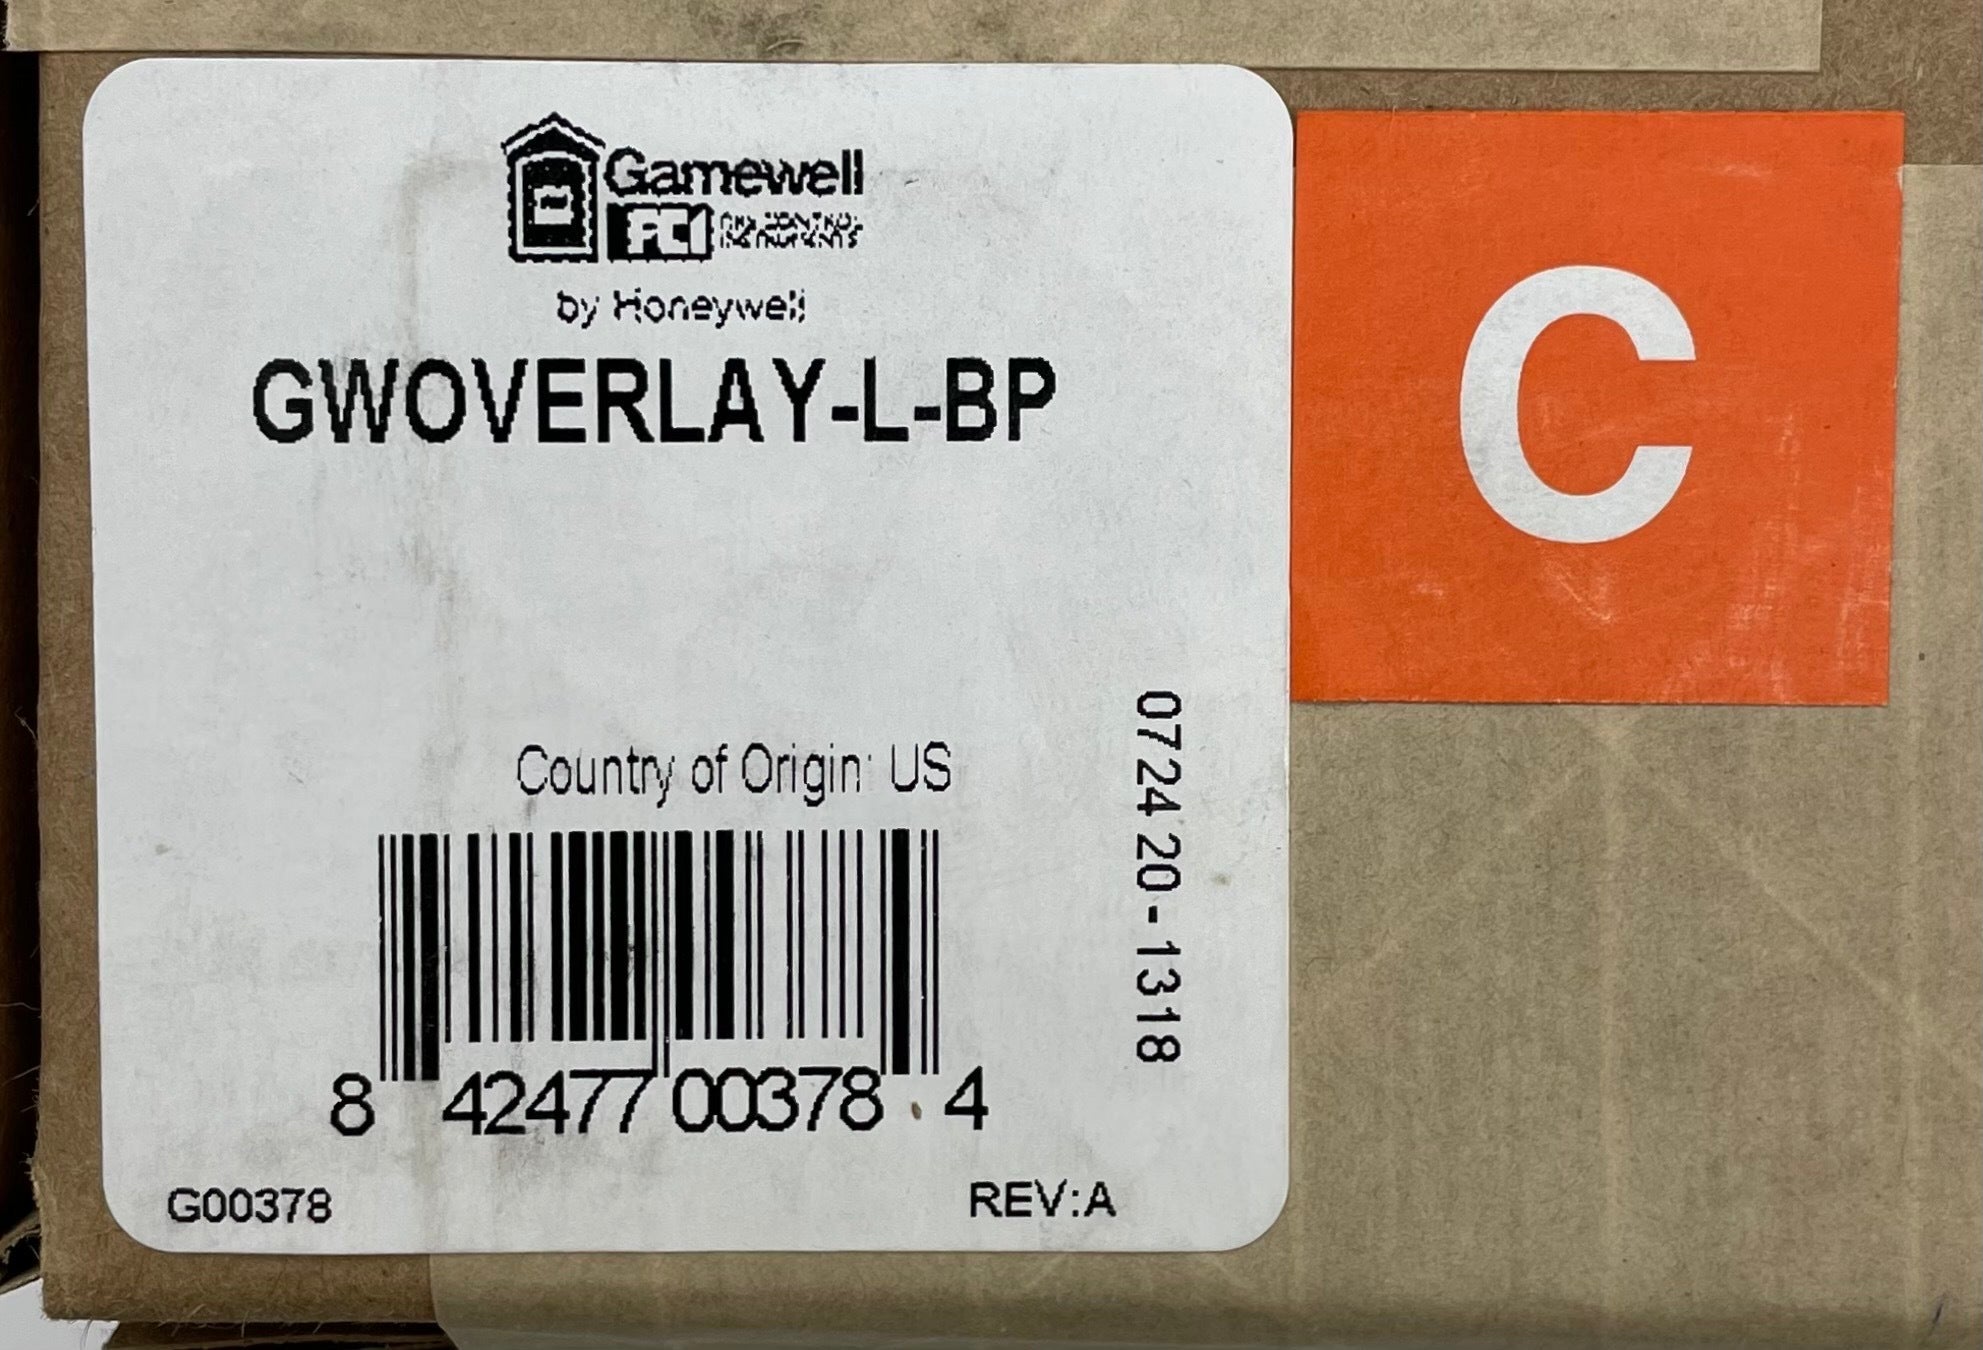 Gamewell-FCI GWOVERLAY-L-BP - The Fire Alarm Supplier